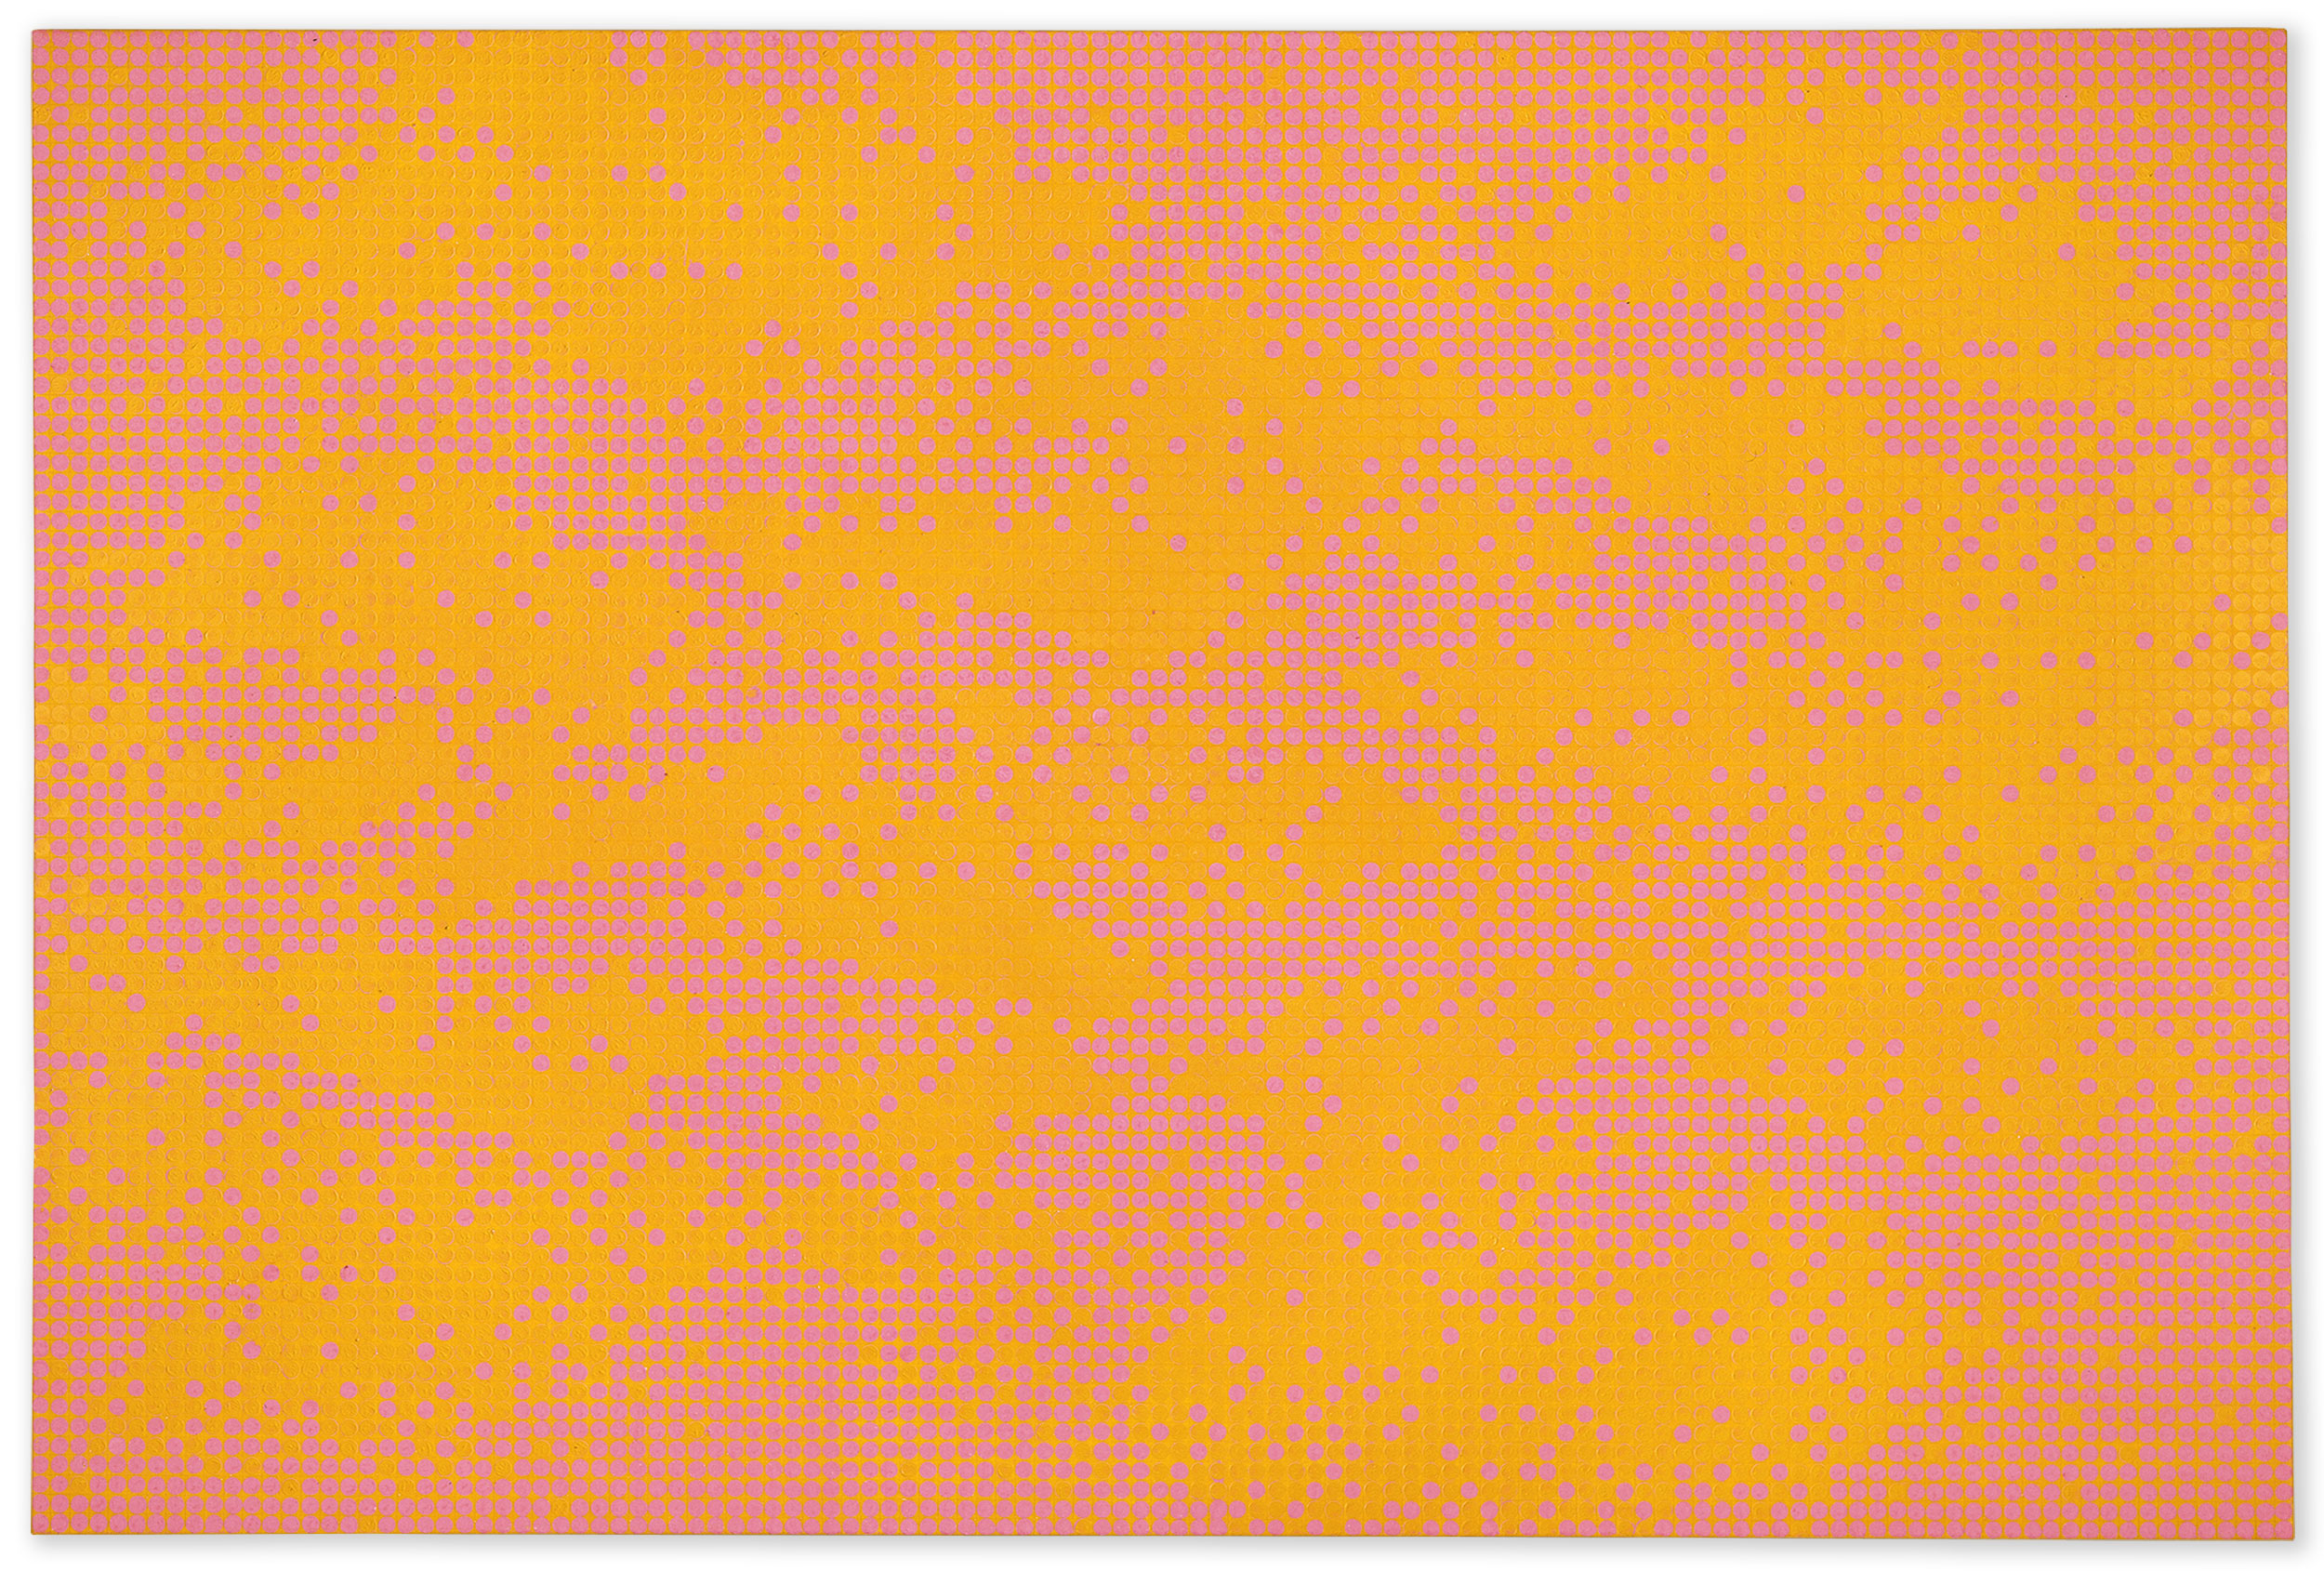 MIRAGE / 2004 · egg tempera on canvas · 180 x 270 cm